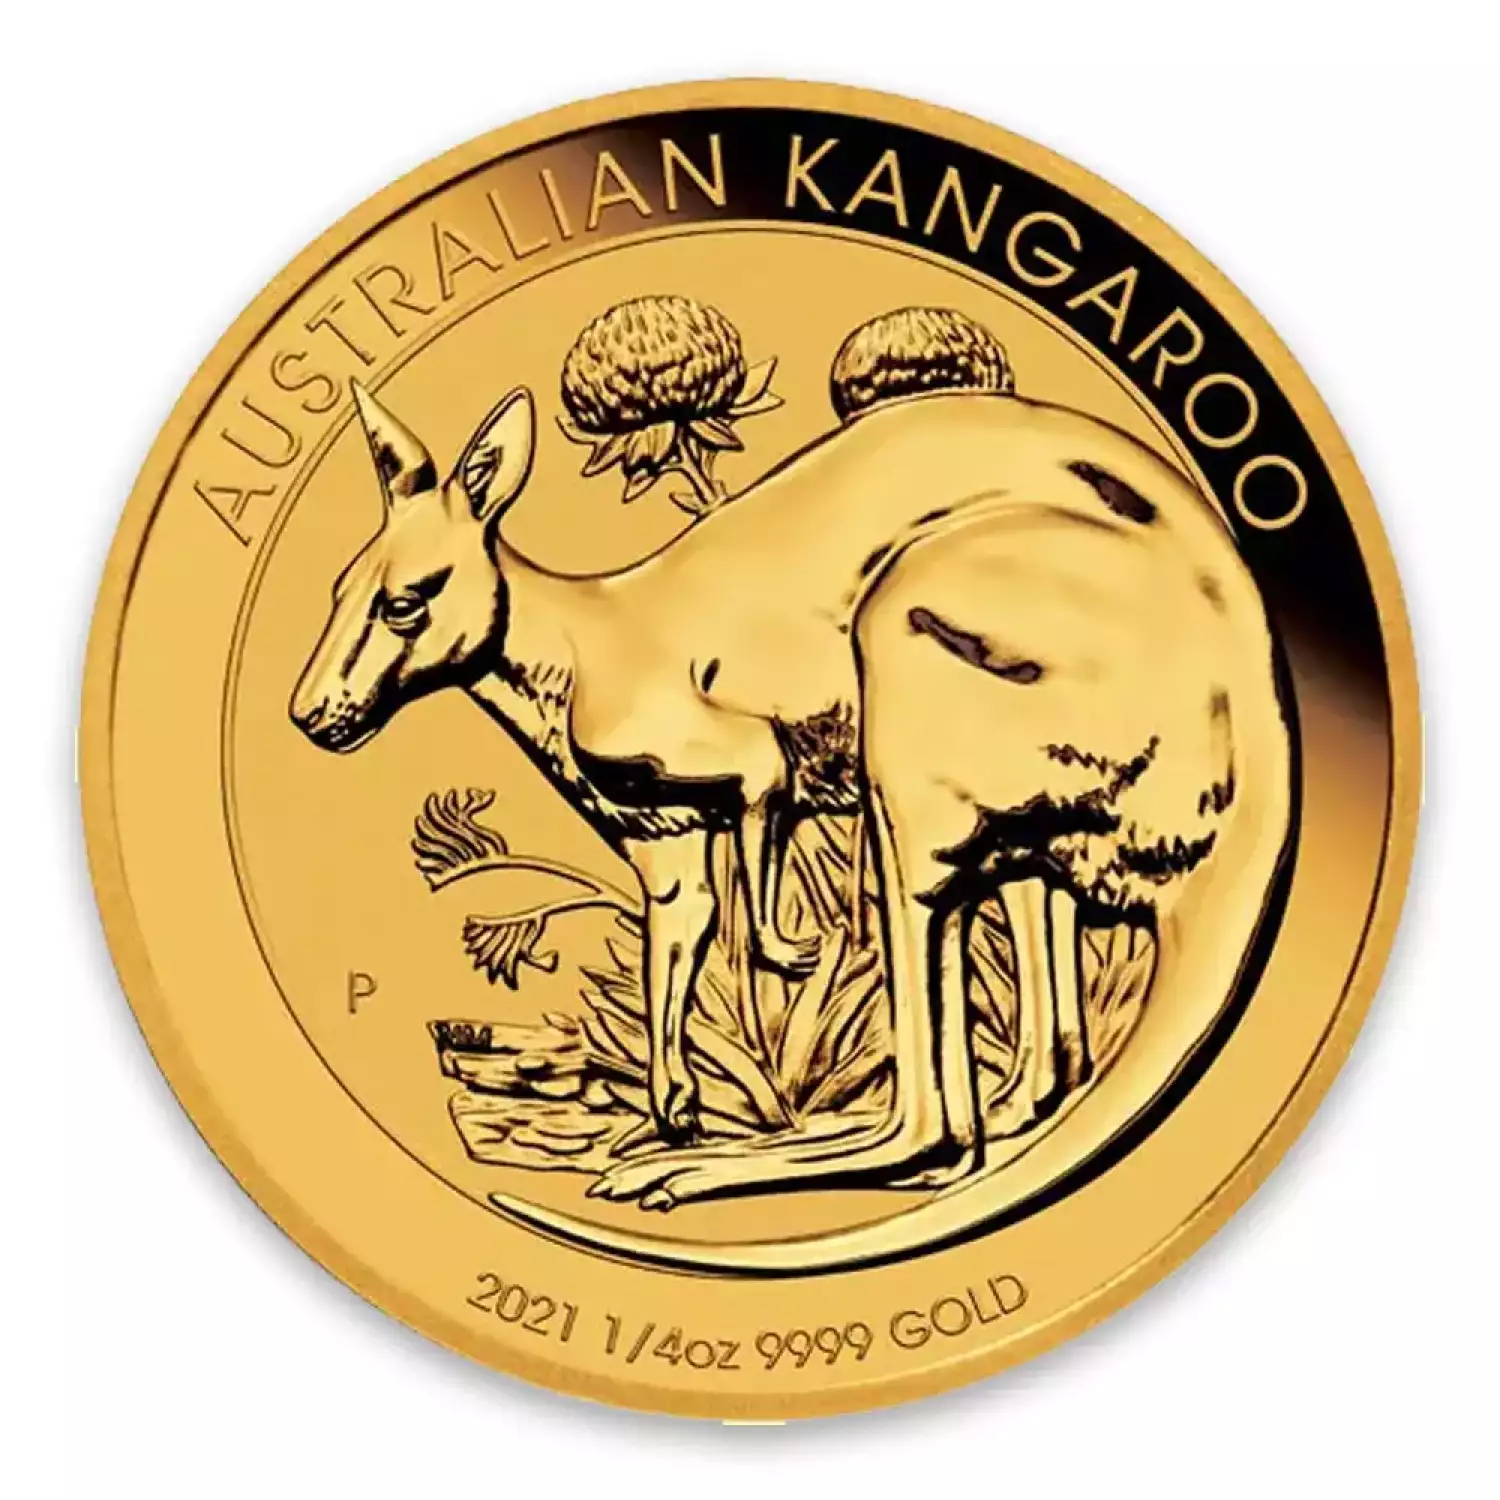 2021 1/4oz Australian Perth Mint Gold Kangaroo (2)